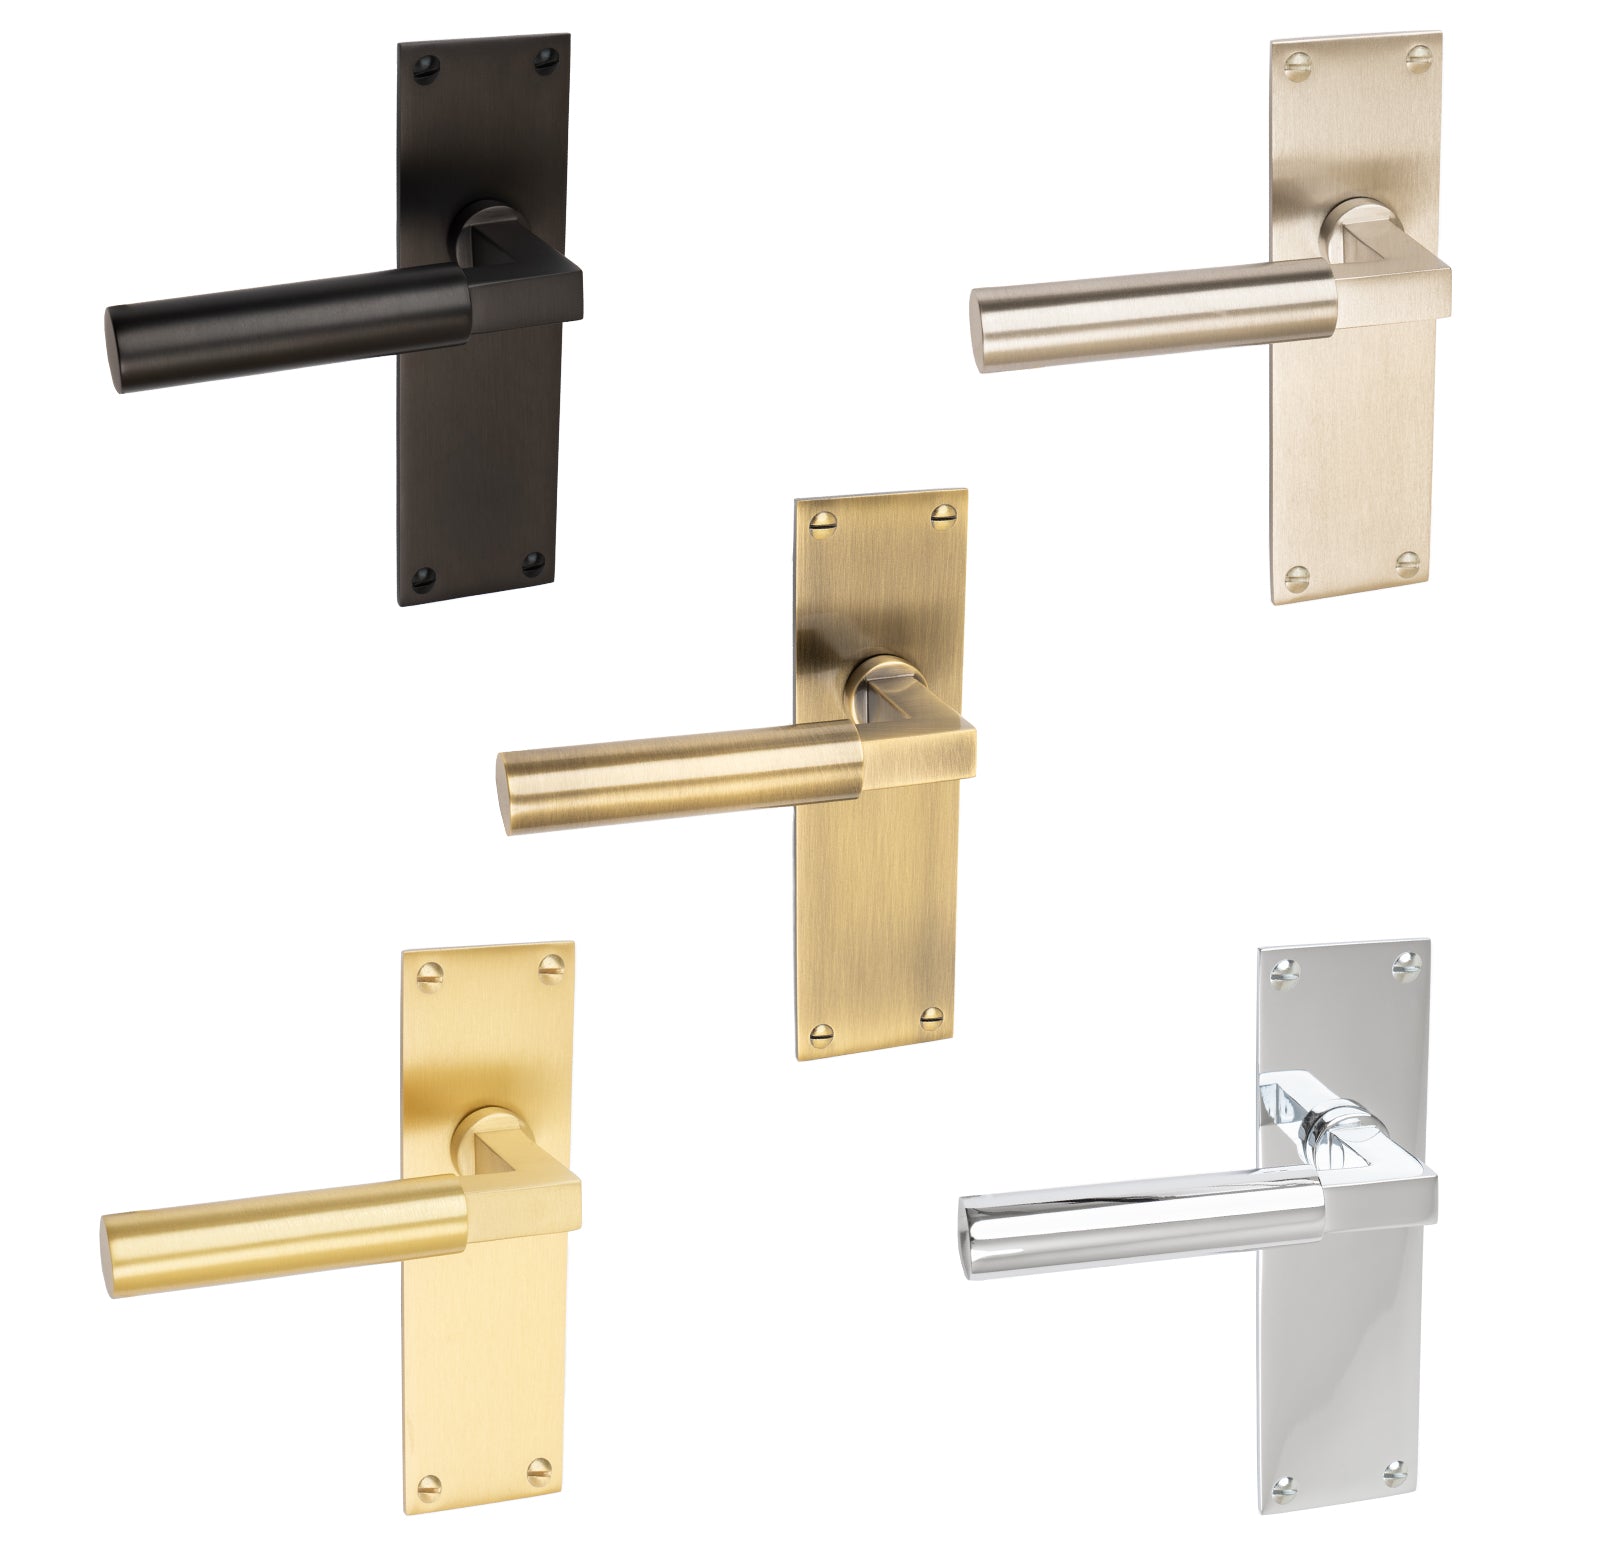 Bauhaus Door Handles On Plate Latch Handle in Matt Bronze, Satin Nickel, Bauhaus Chrome, Satin Brass and Aged Brass.